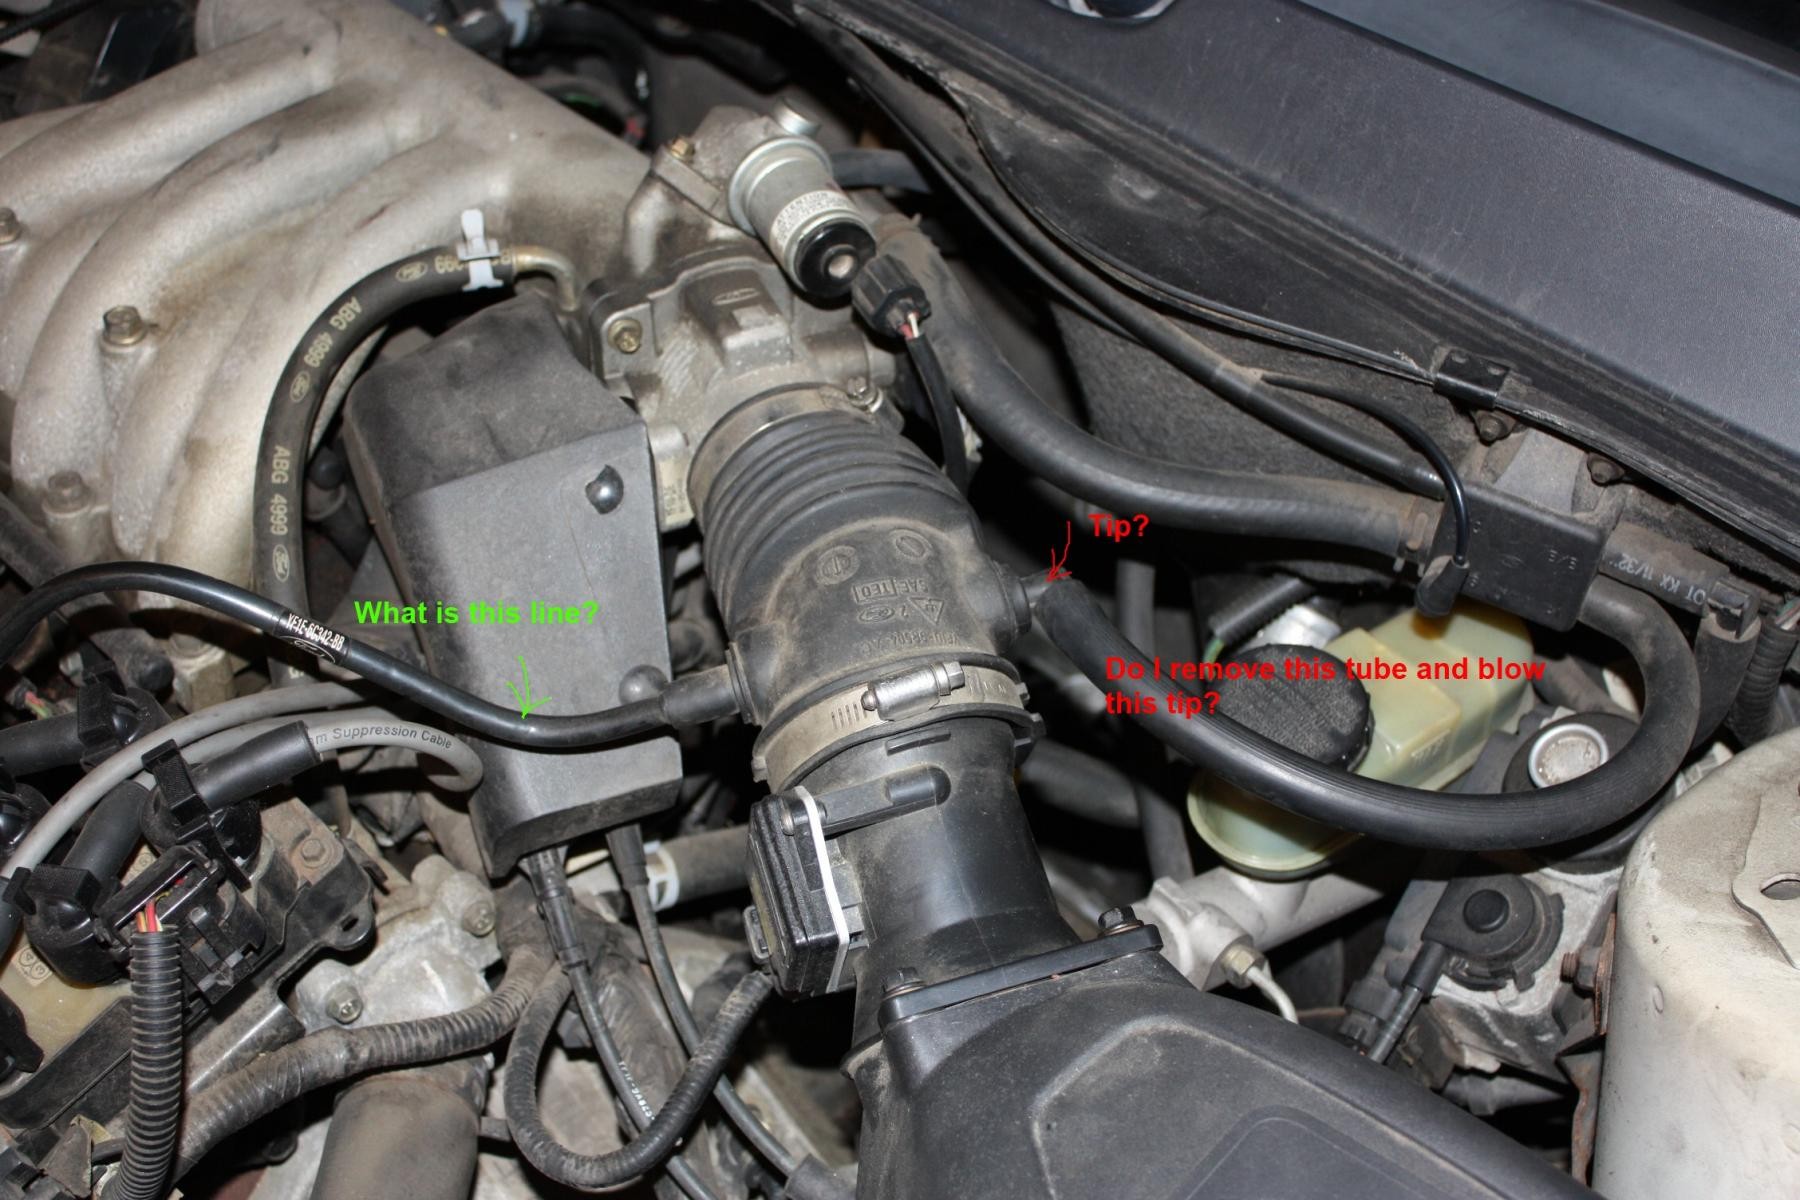 2003 ford Taurus Engine Hose Diagram How to Perform Vacuum Leak Test with Smoke Taurus Car Club Of Of 2003 ford Taurus Engine Hose Diagram